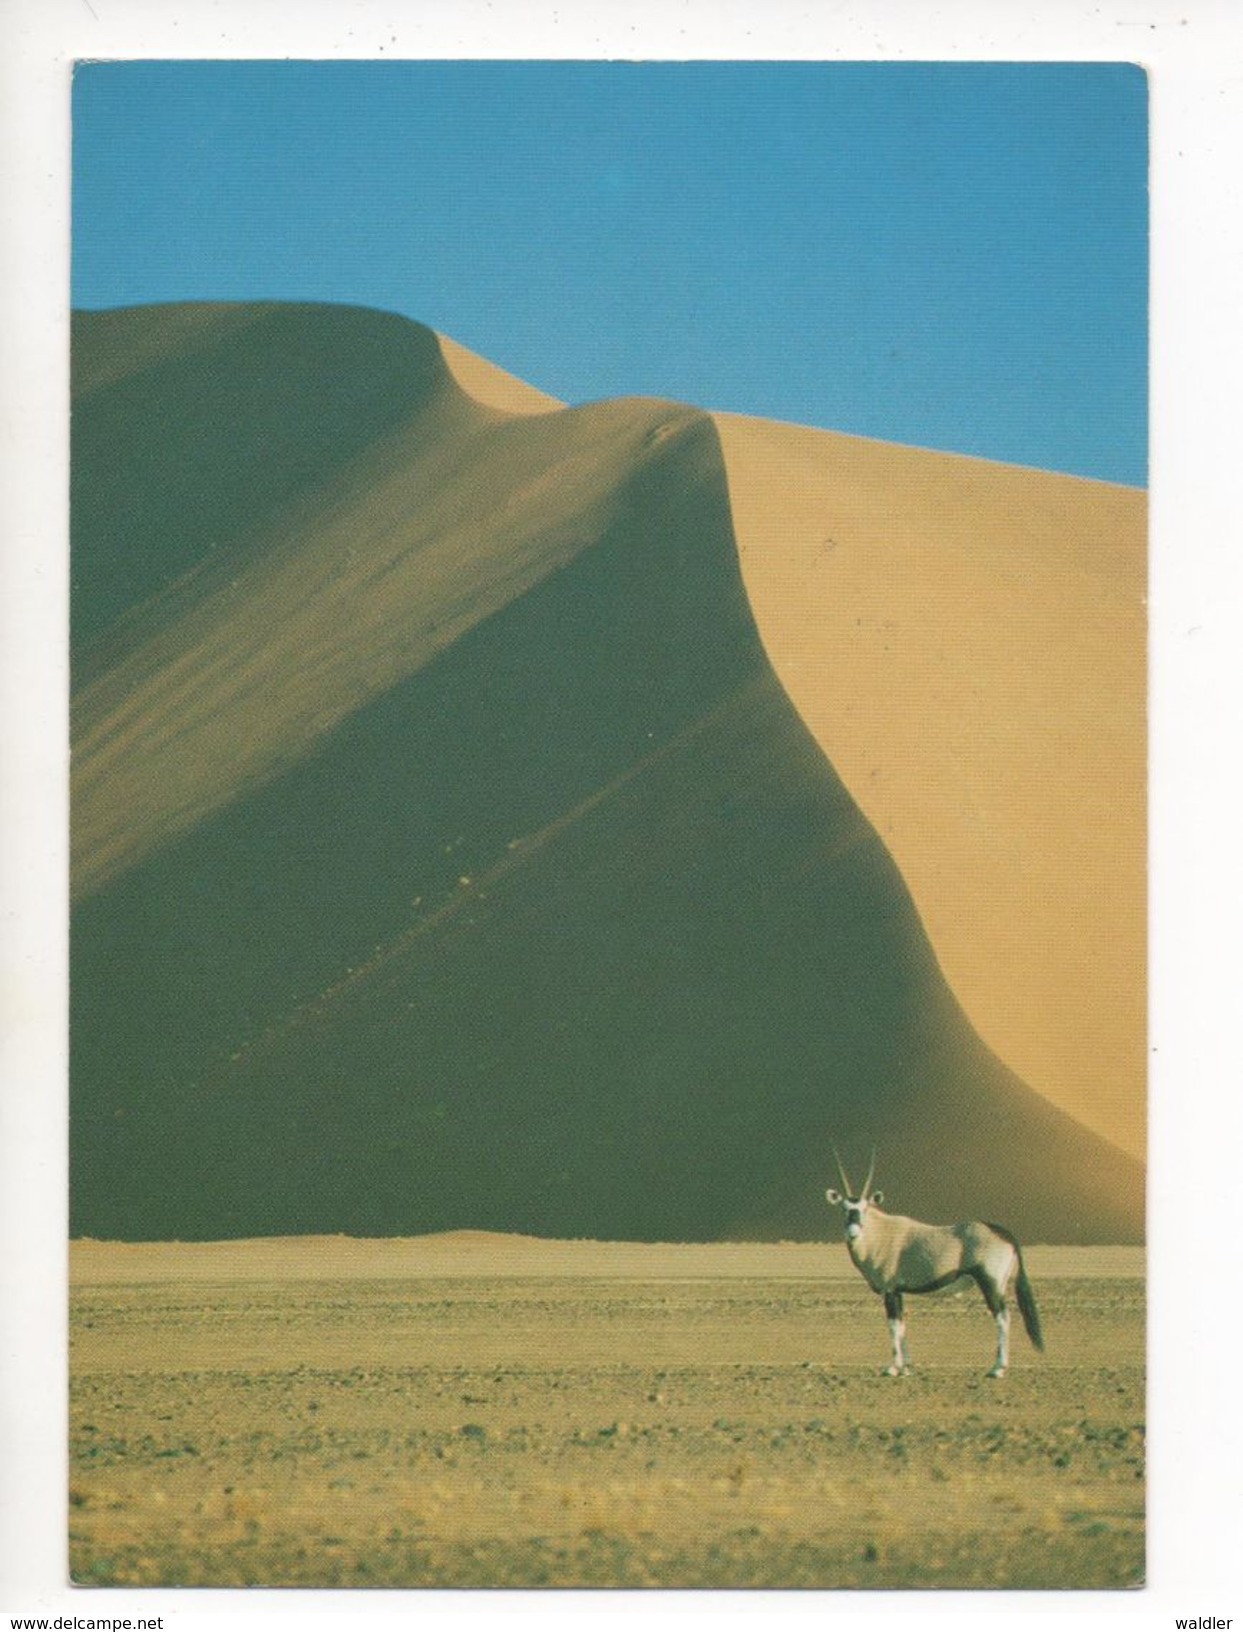 SUSSUSVLEI   1990 - Namibia